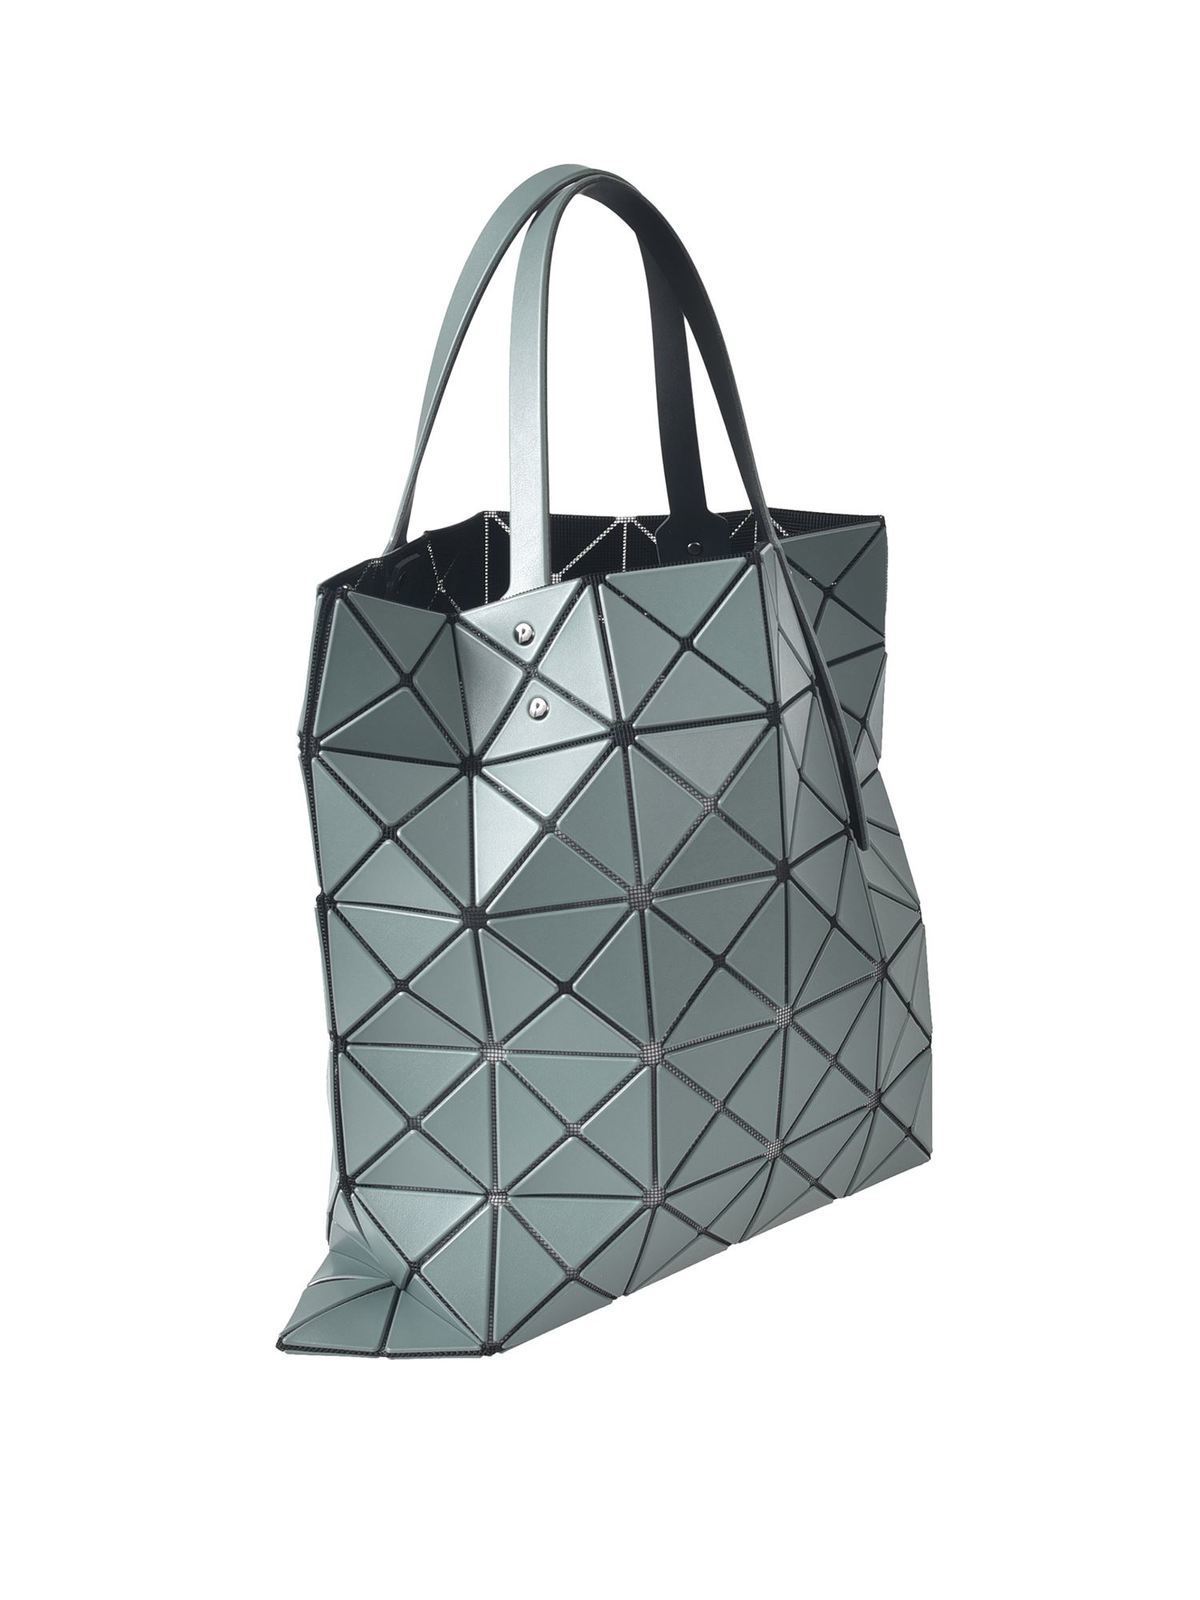 BAO BAO Issey Miyake - Lucent Matte-2 shopper bag in green - totes bags ...